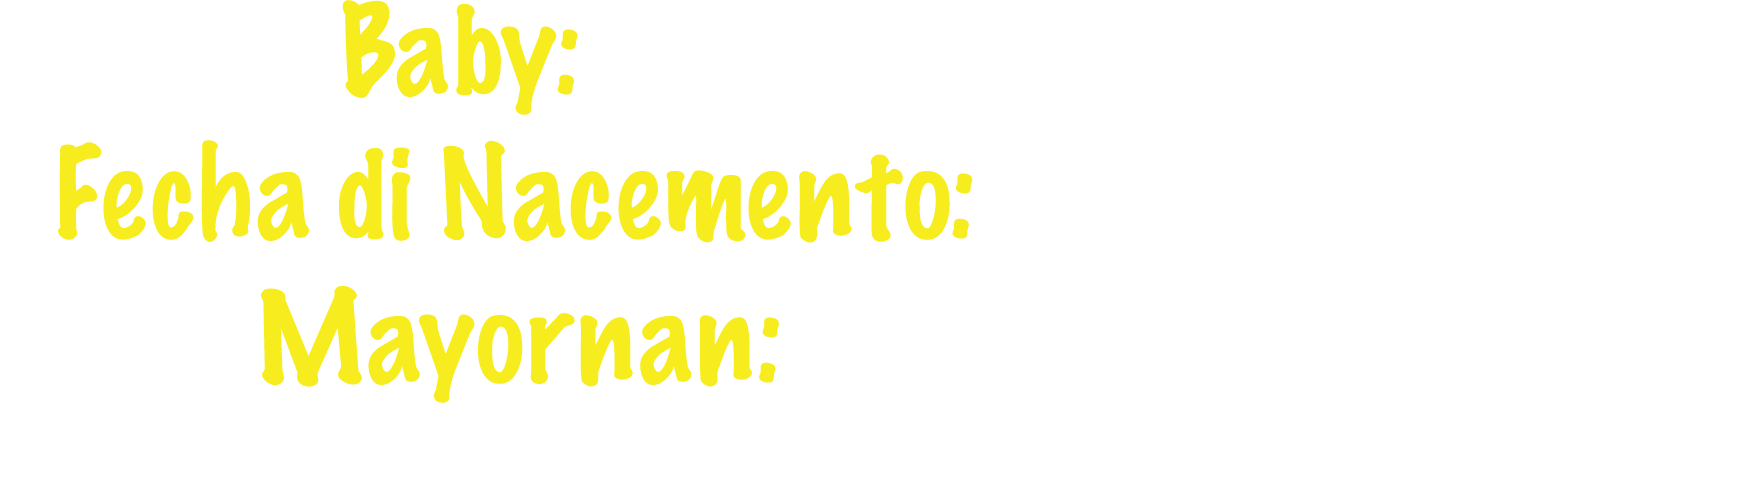 Baby: Alijah William Grovell Fecha di Nacemento: 21 augustus 2022 Mayornan: Raquelle Reeberg & Alberto Grovell